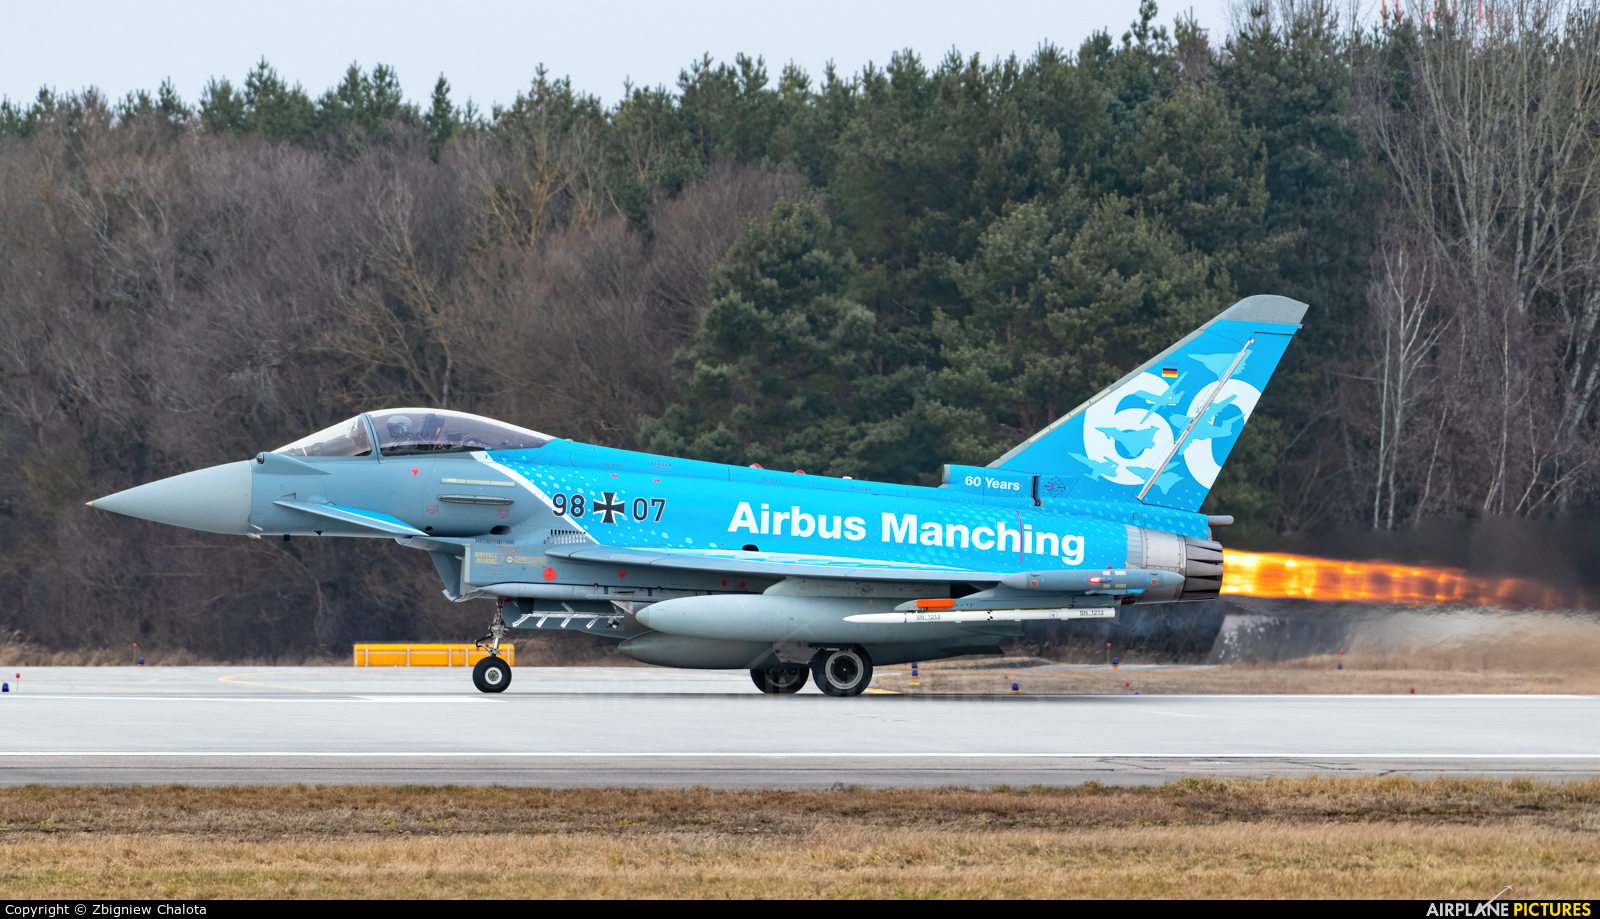 Germany - Air Force 98+07 aircraft at Ingolstadt - Manching